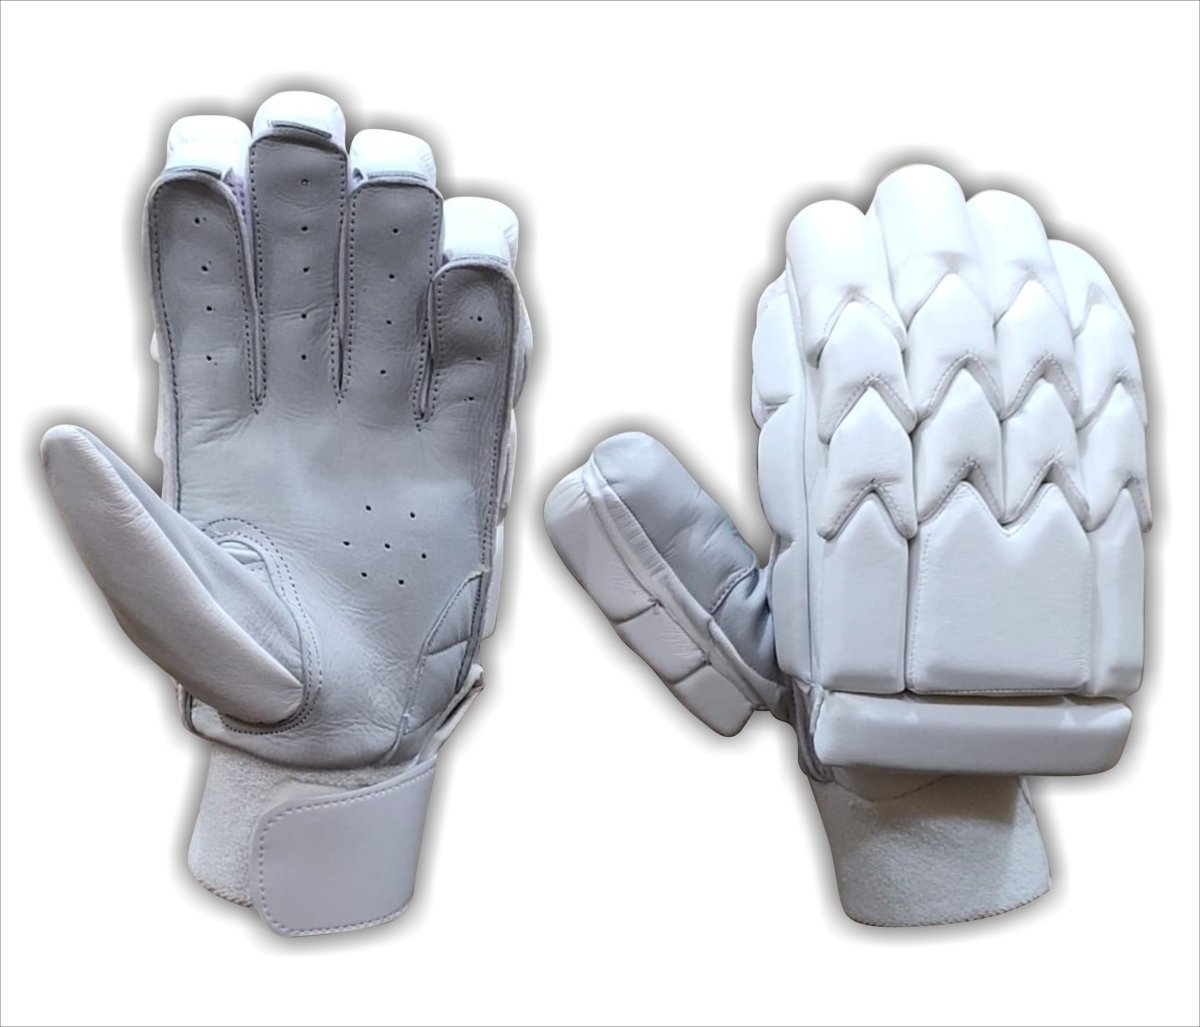 SW-05 Cricket Batting Gloves Calf Palm